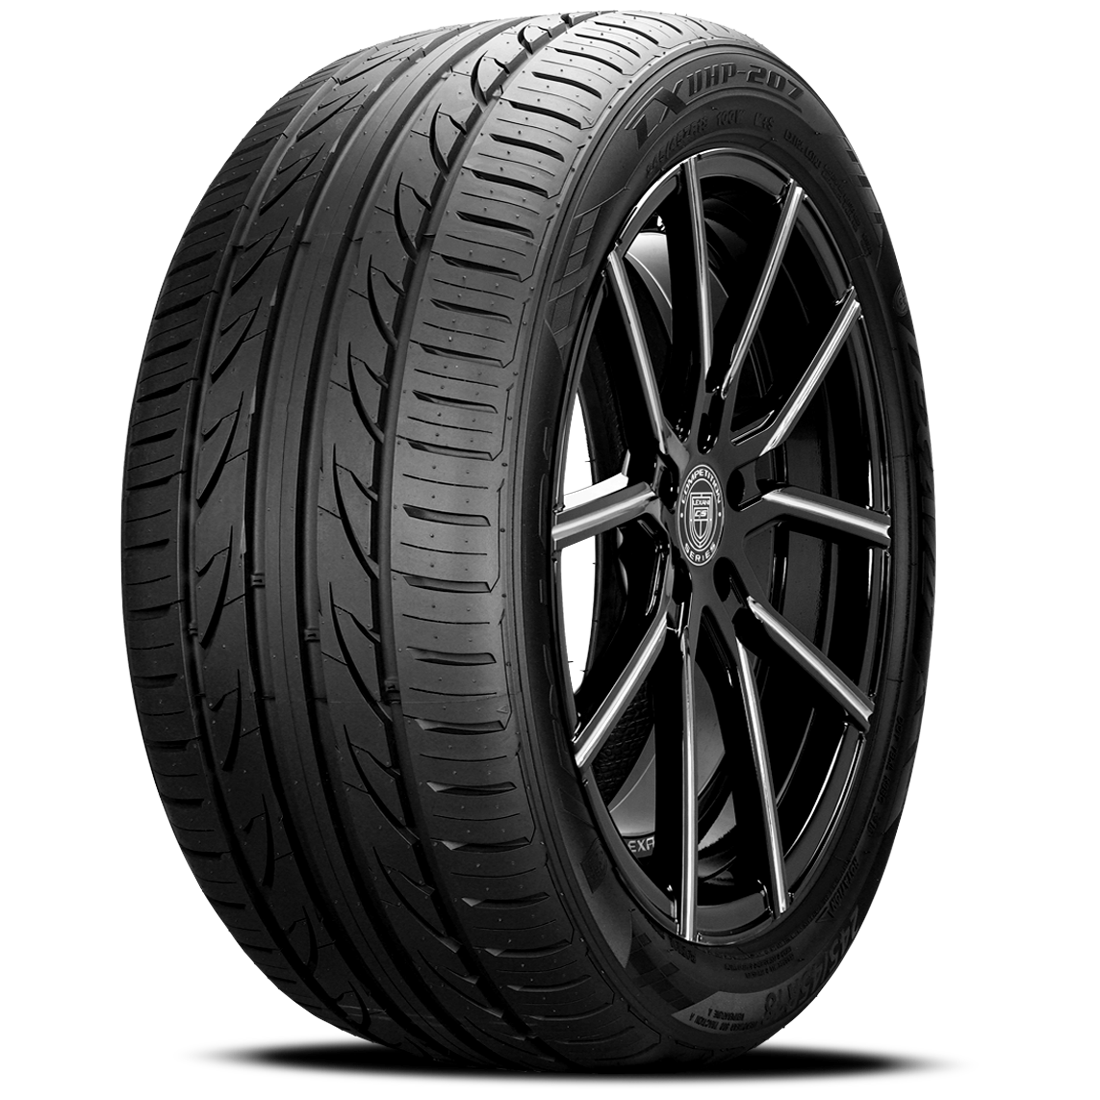 LEXANI LXUHP-207 205/45ZR17 (24.3X8.1R 17) Tires